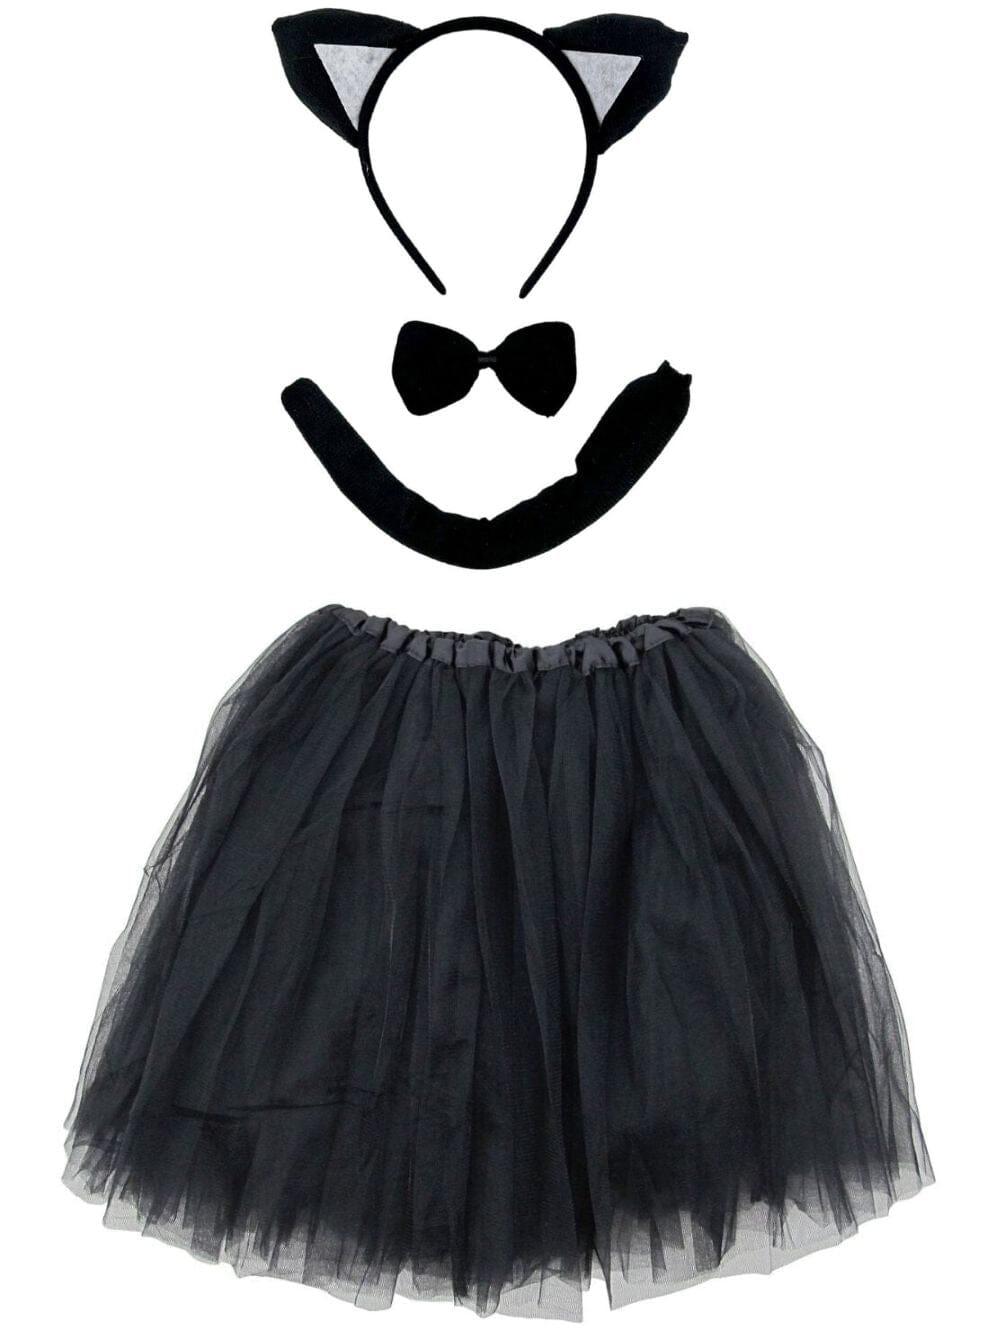 Adult Black Cat Costume - Tutu Skirt, Tail, & Headband Set for Adult or Plus Size - Sydney So Sweet